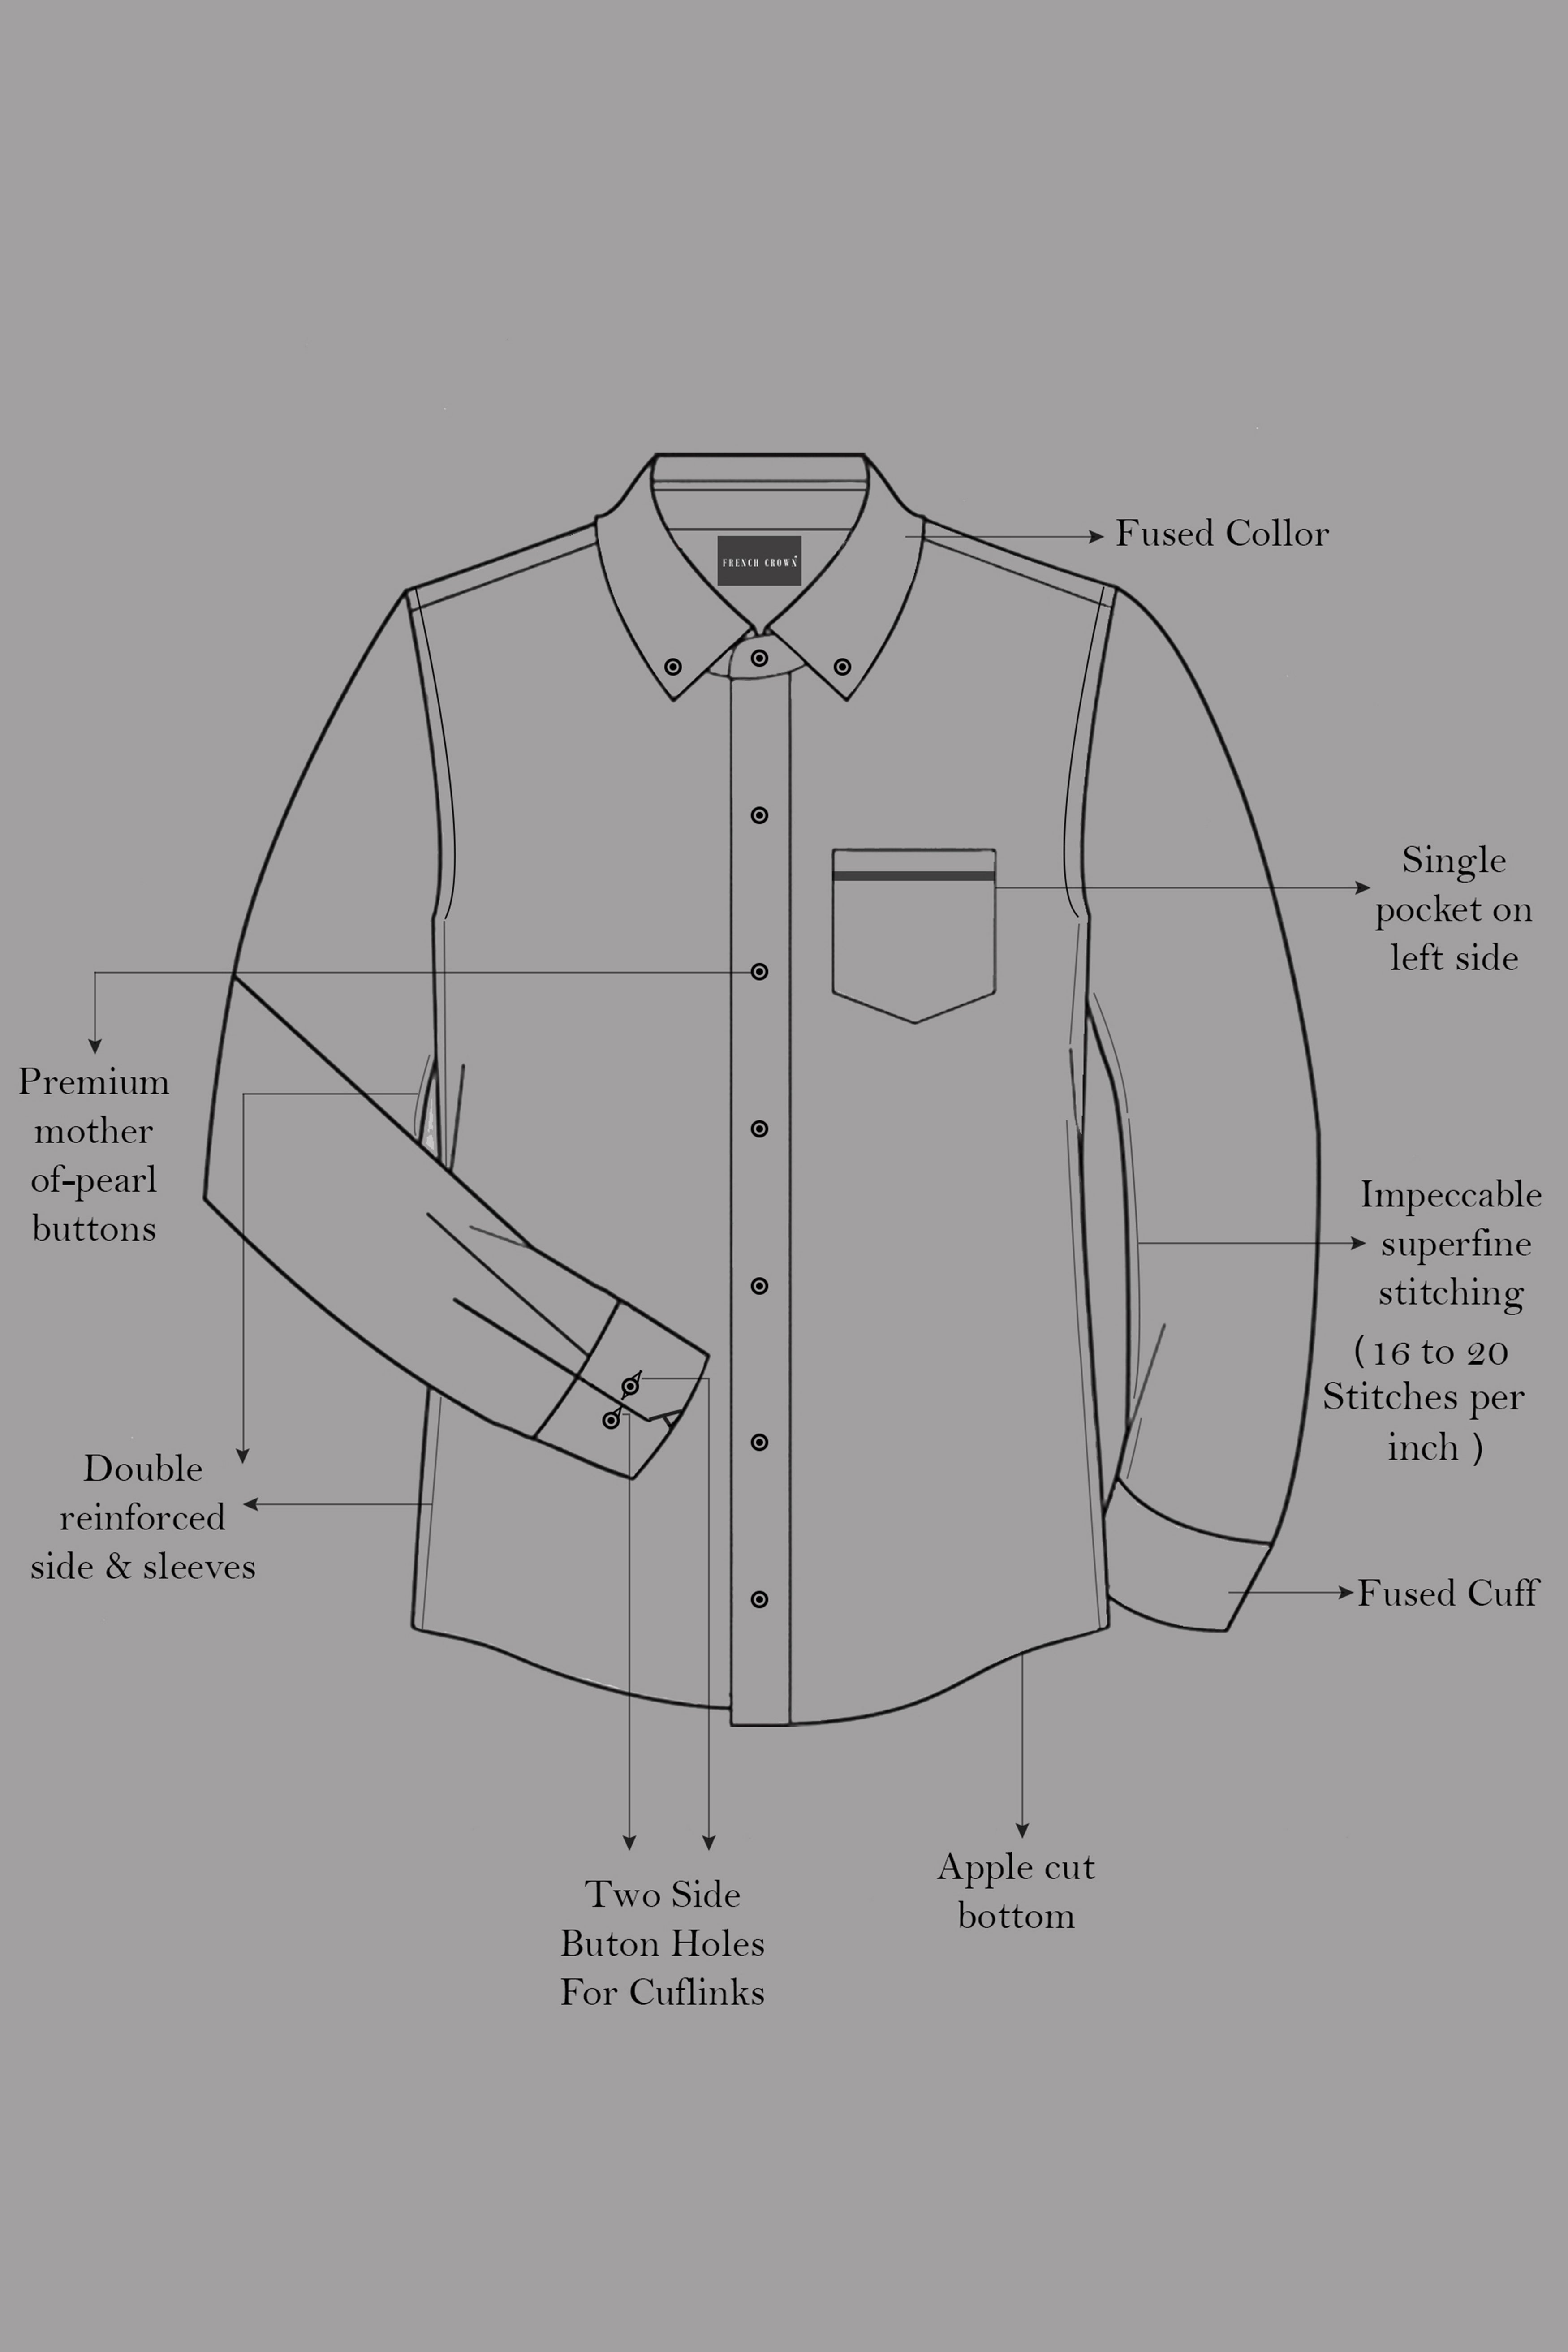 Cinder Black and Wenge Brown Twill Plaid Premium Cotton Button Down Shirt